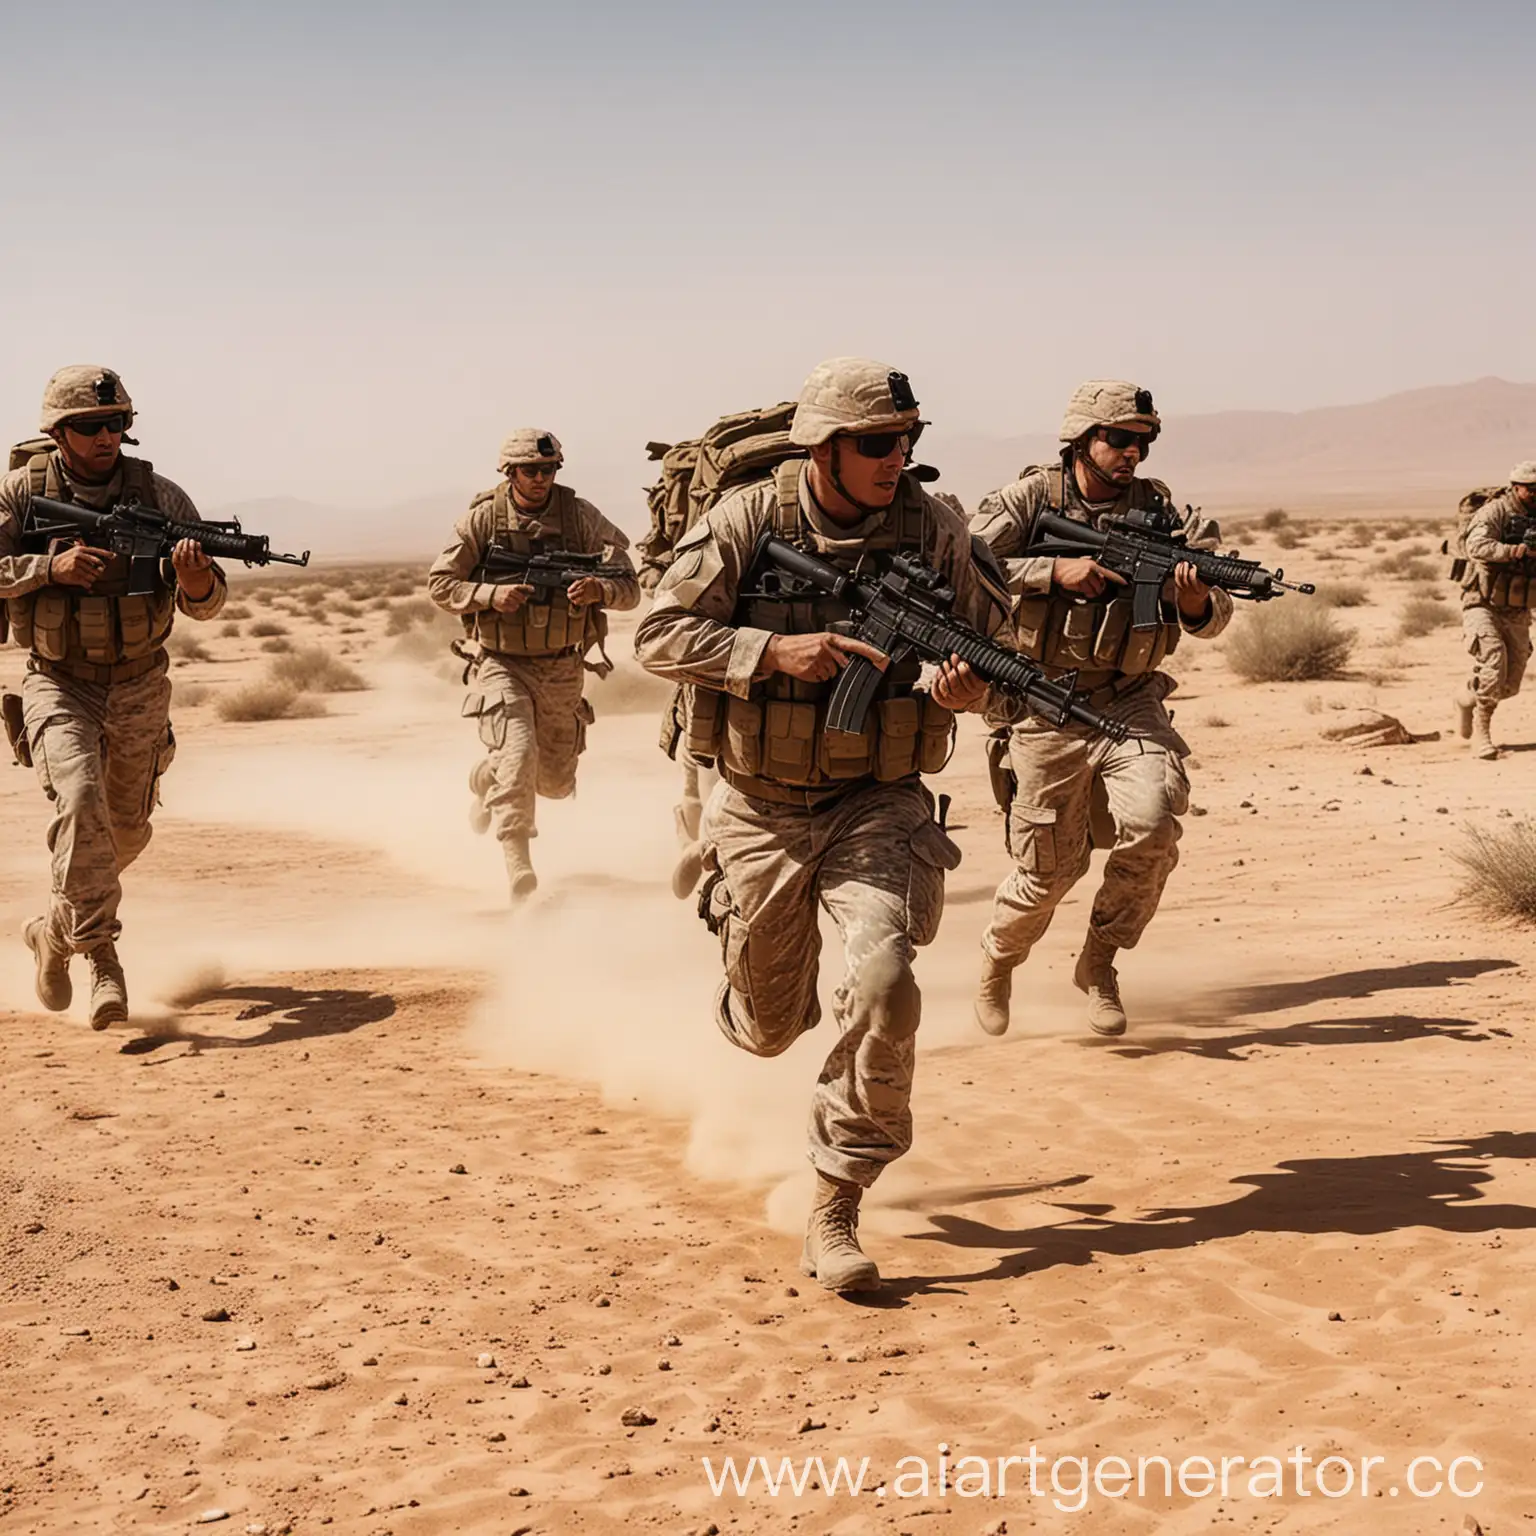 Armed-Soldiers-Running-Through-Desert-Terrain